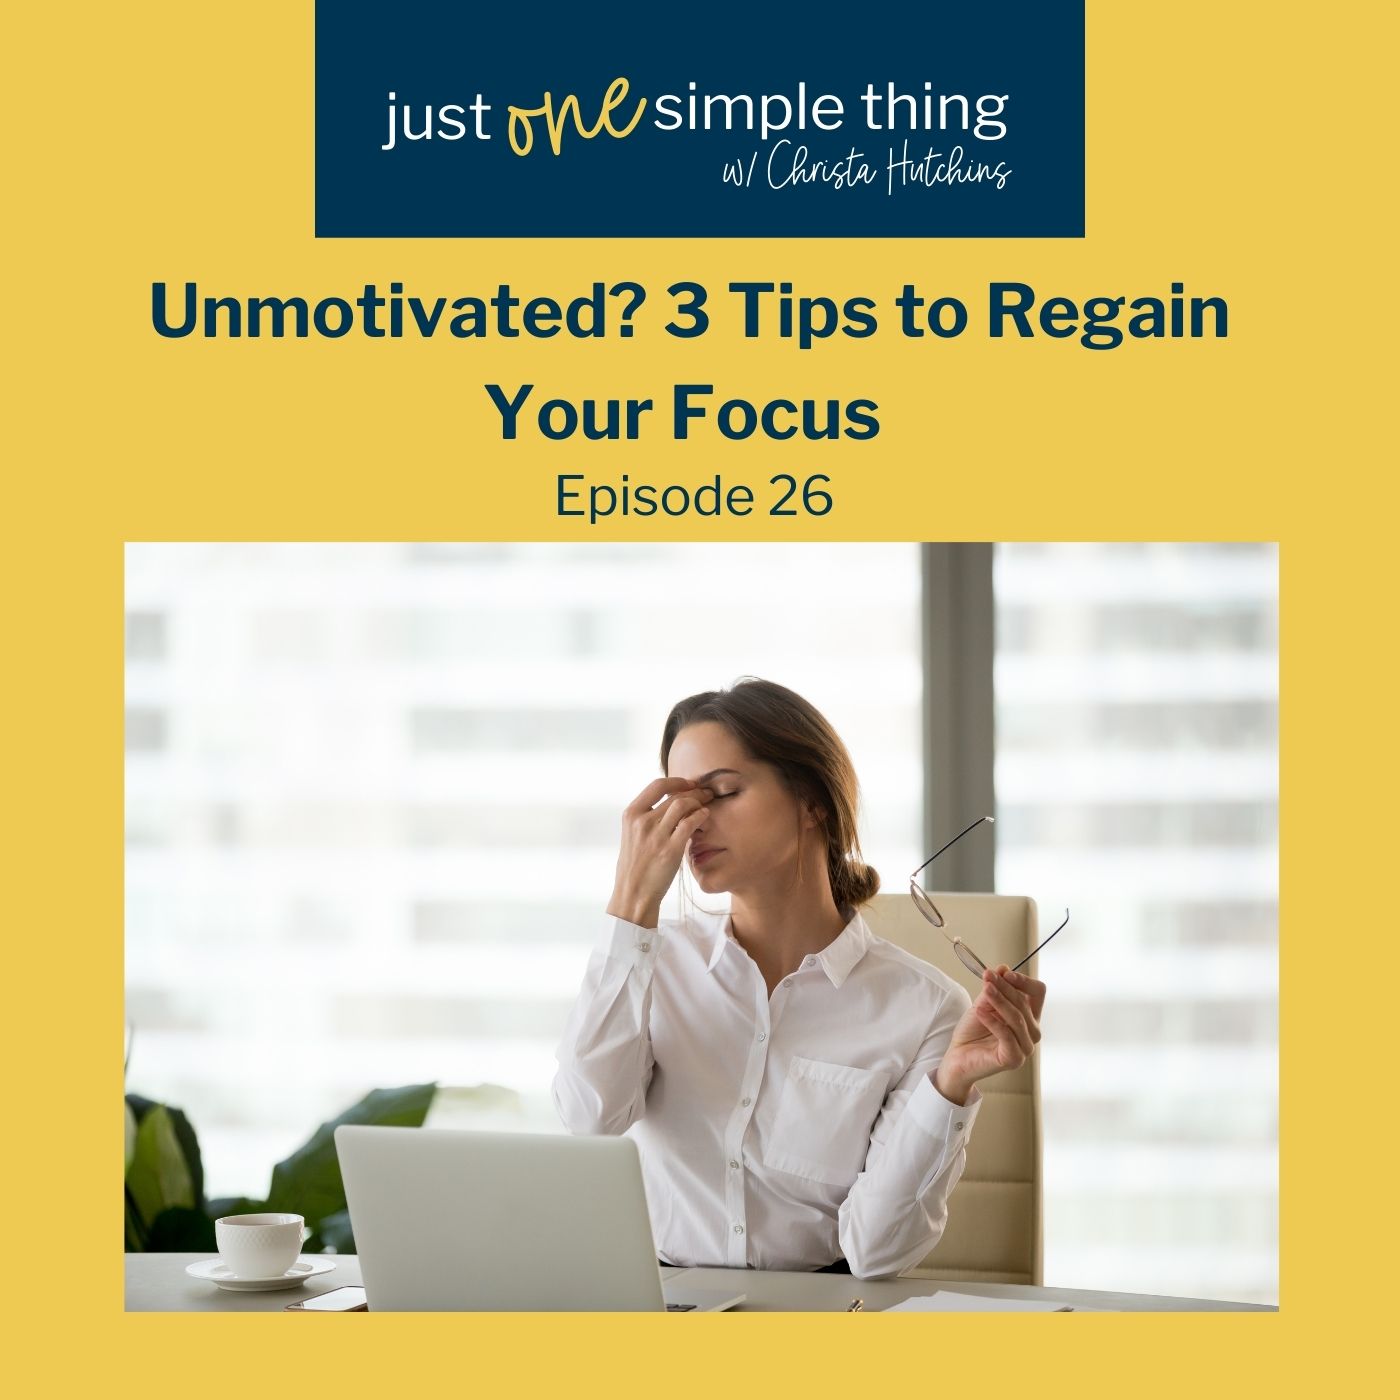 Unmotivated? 3 Tips to Regain Your Focus